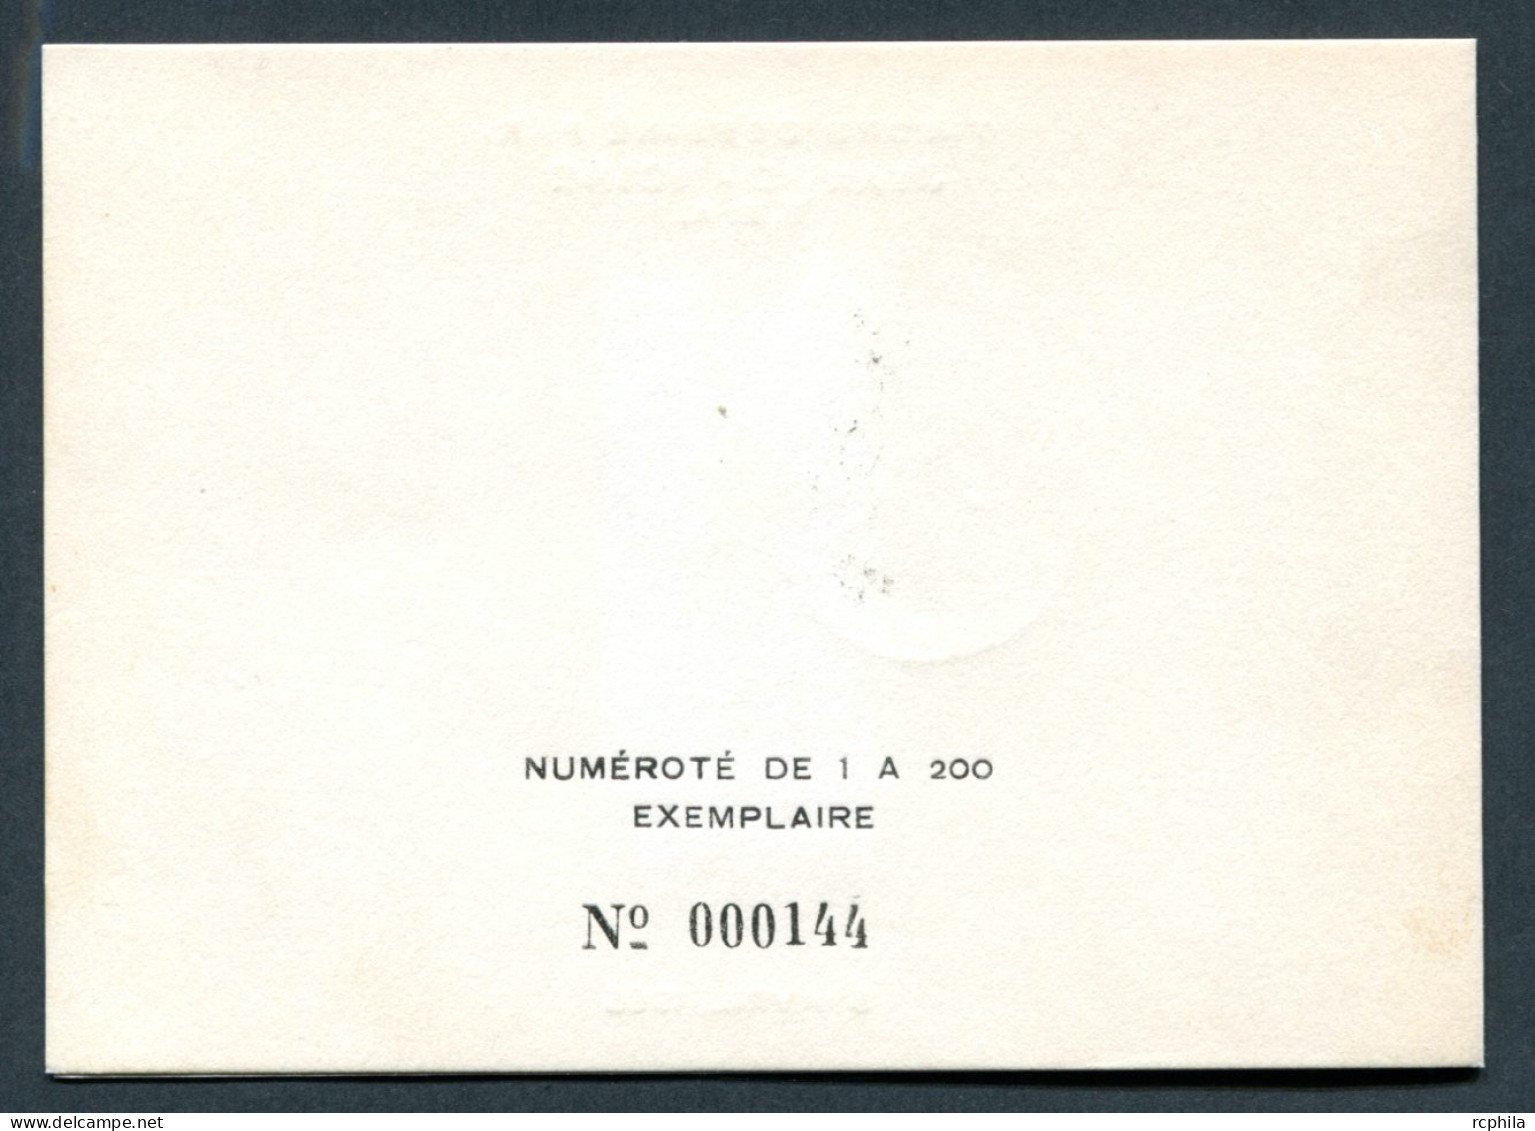 RC 27465 MAROC N° 481 FLORE MAROCAINE GLAÏEULS ENCART 1er JOUR TIRAGE 200 Ex SIGNÉ JEAN DANDINE - Morocco (1956-...)